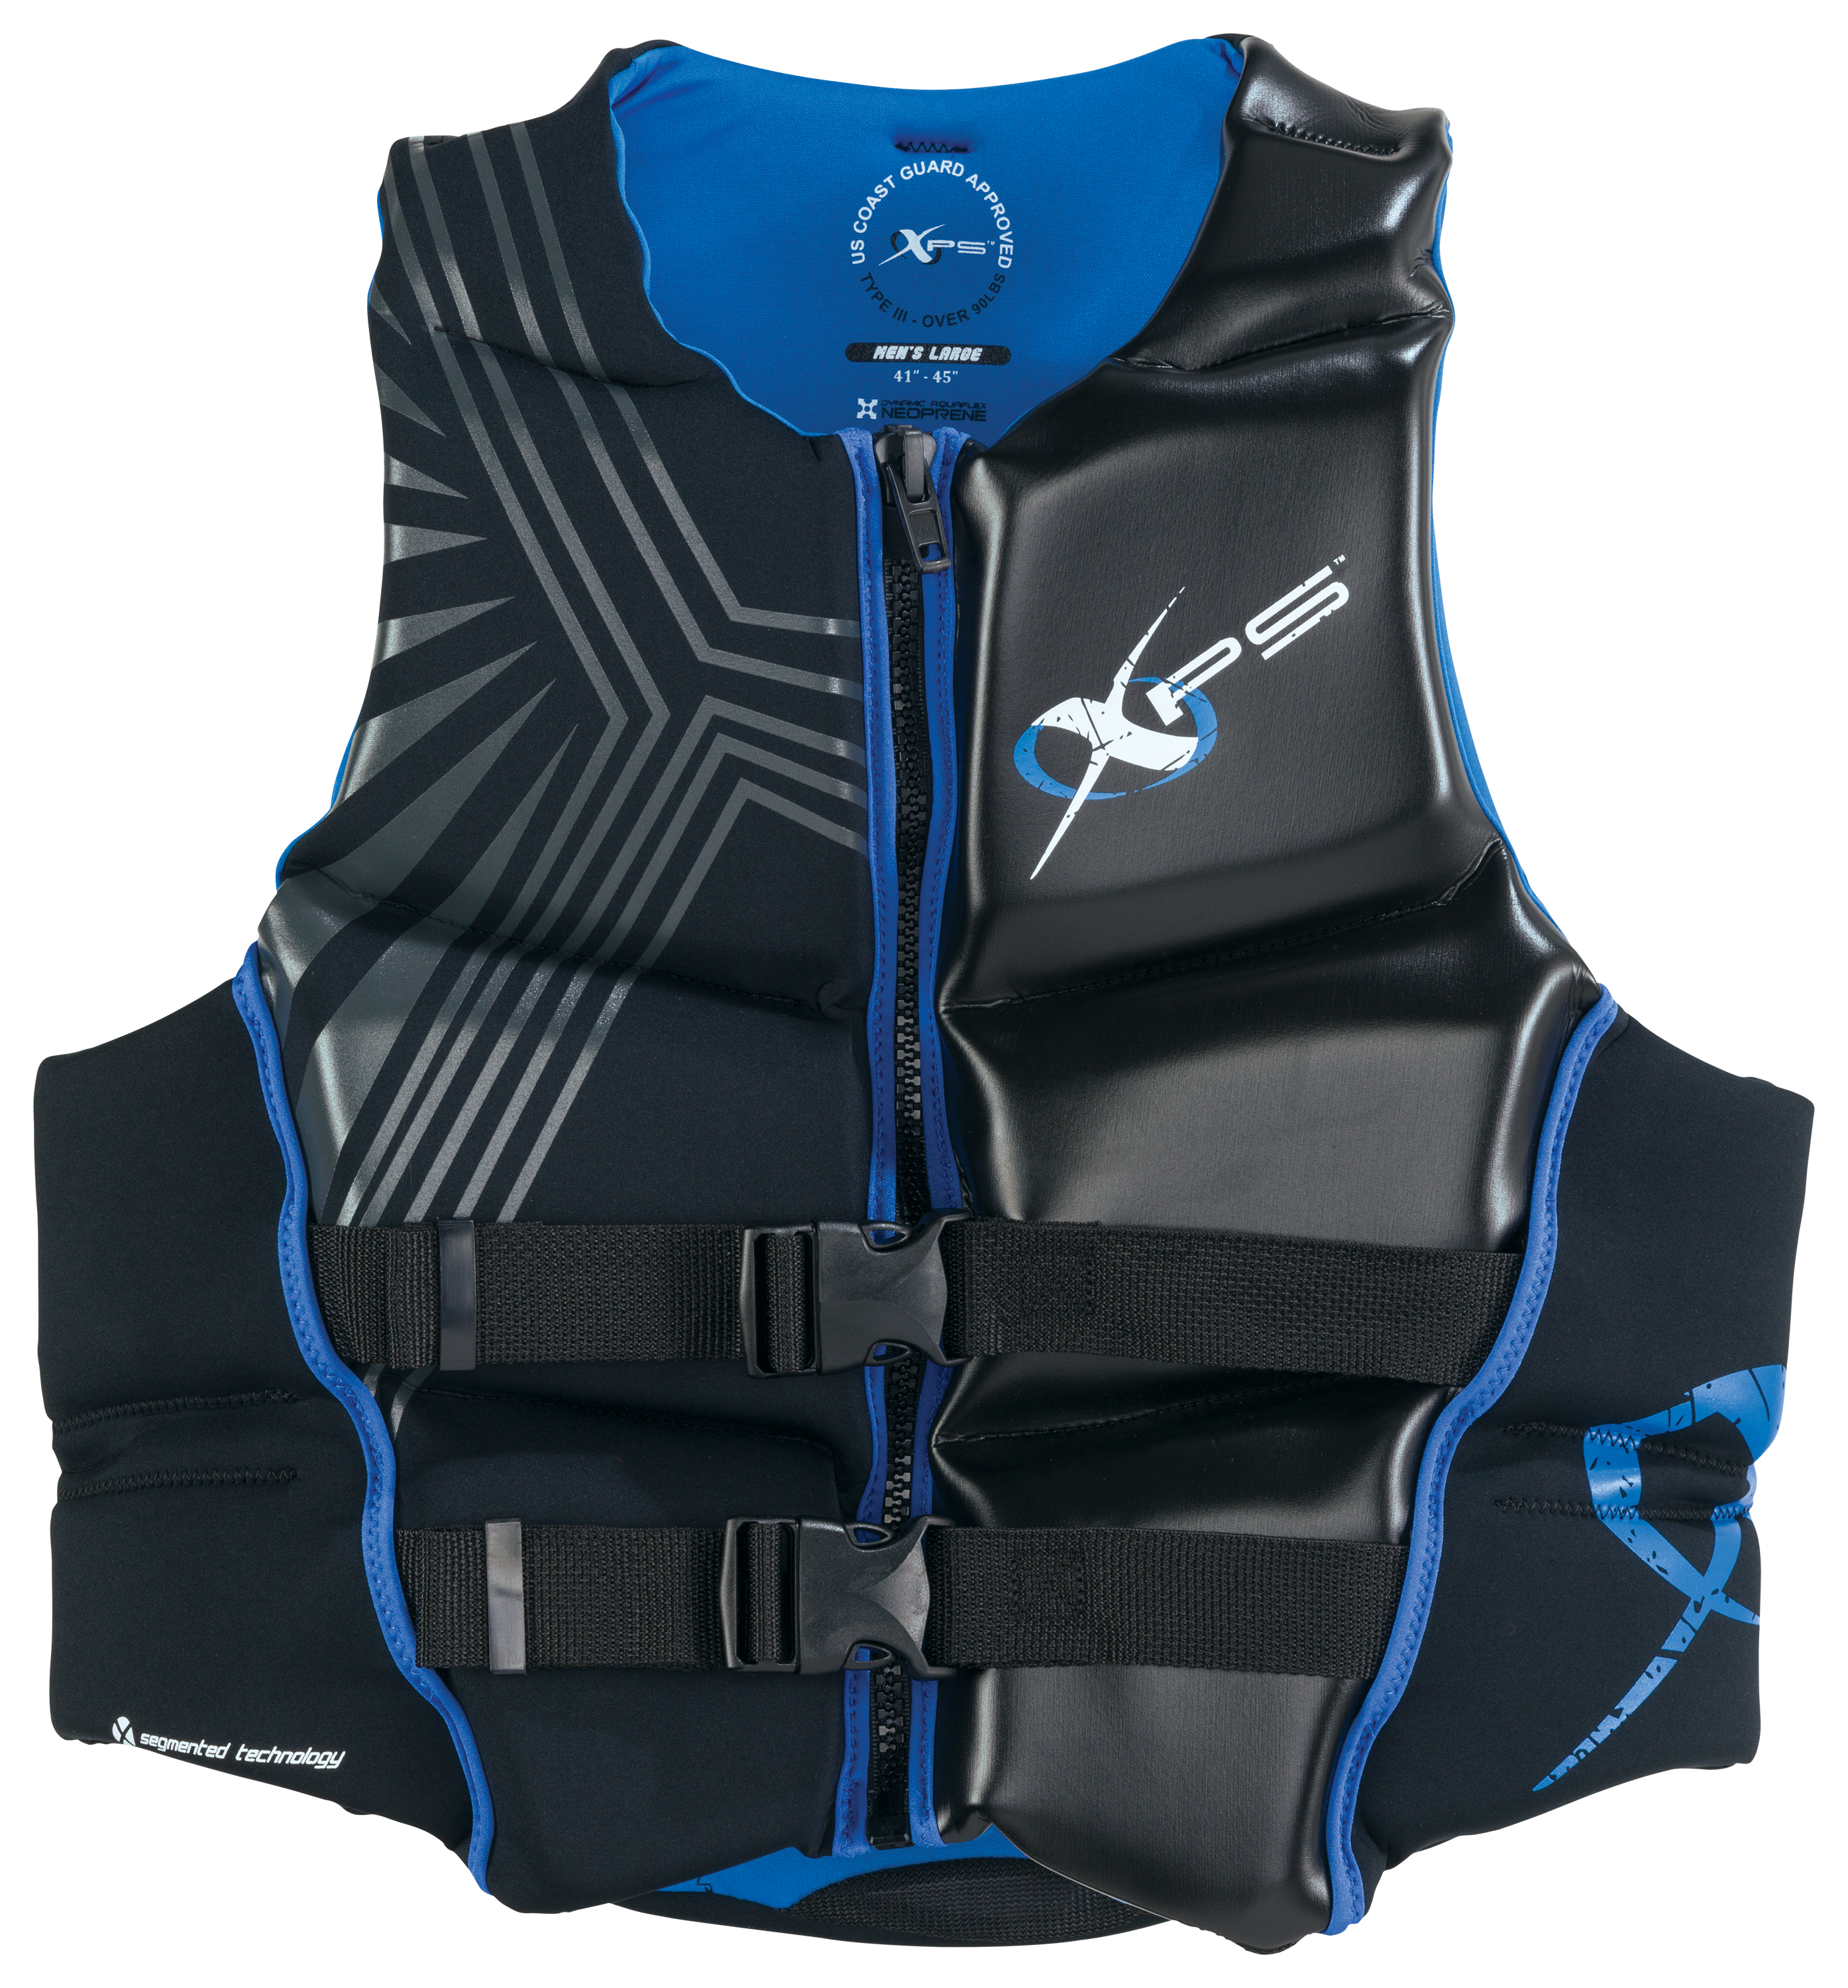 XPS Platinum Neoprene Segmented Life Jacket for Men - Black Royal - L